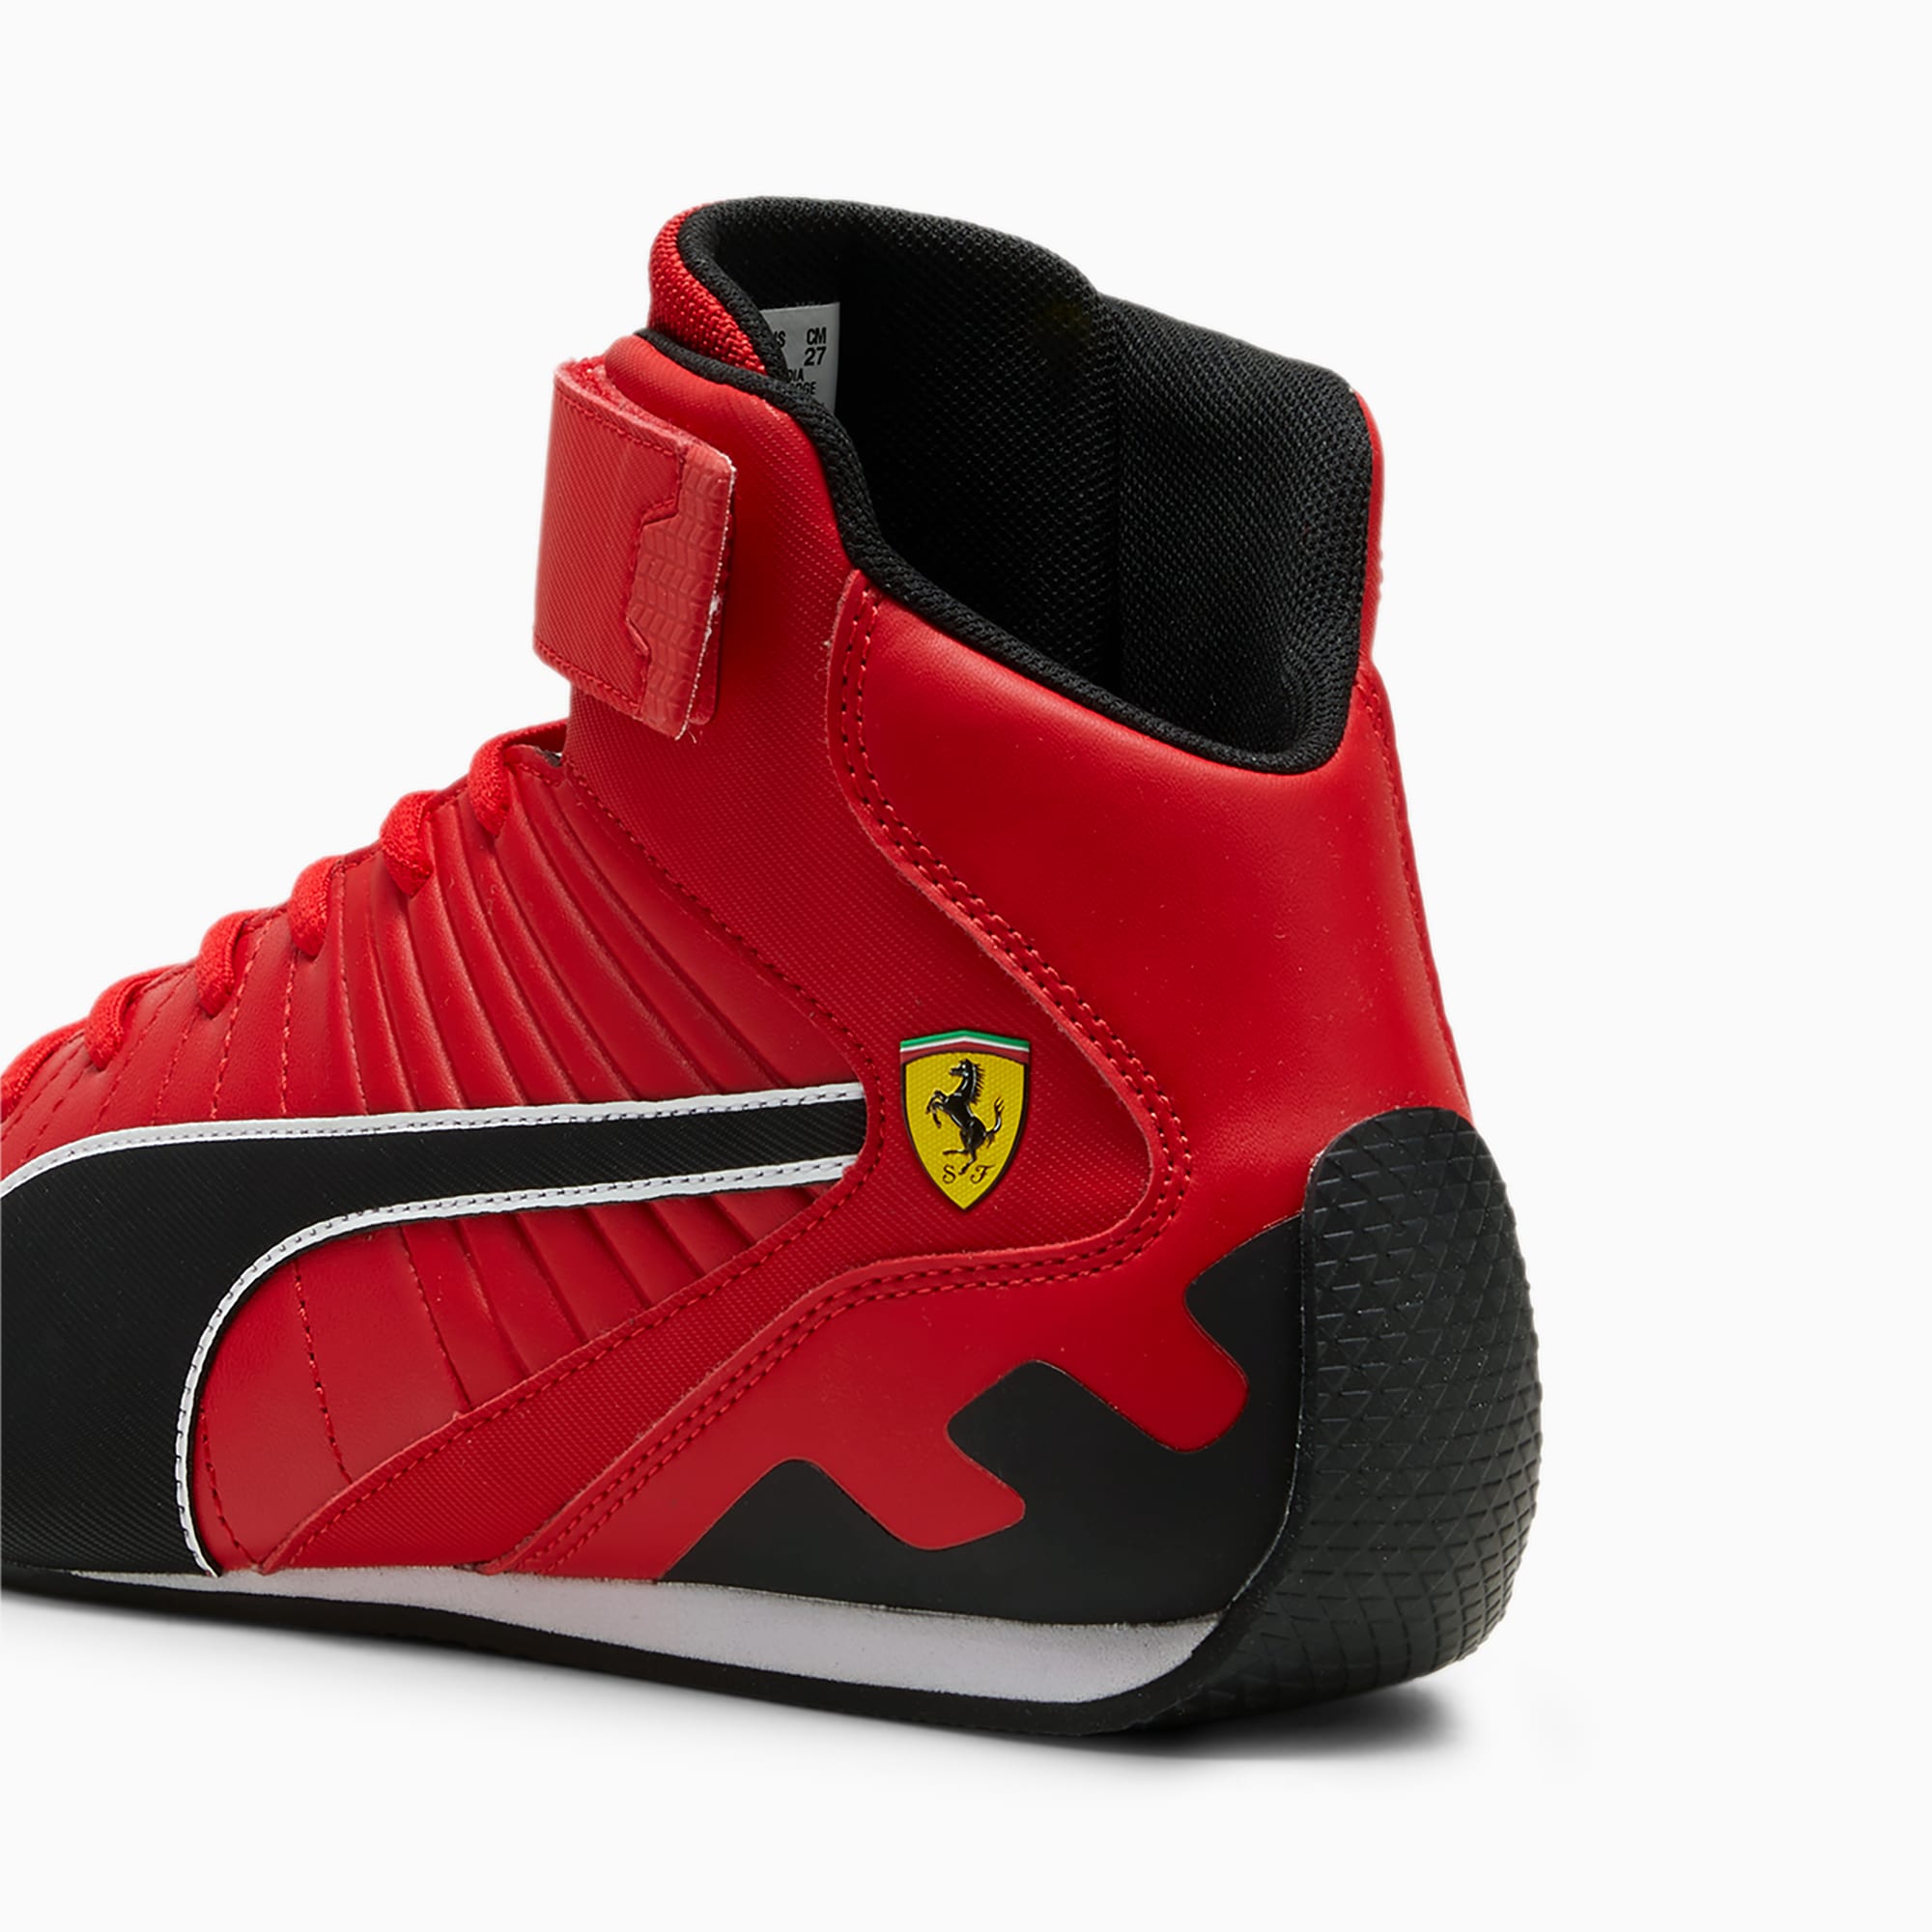 PUMA Scuderia Ferrari Kart Cat RL Mid Motorsport Sneakers Schuhe, Rot/Schwarz, Größe: 39, Schuhe